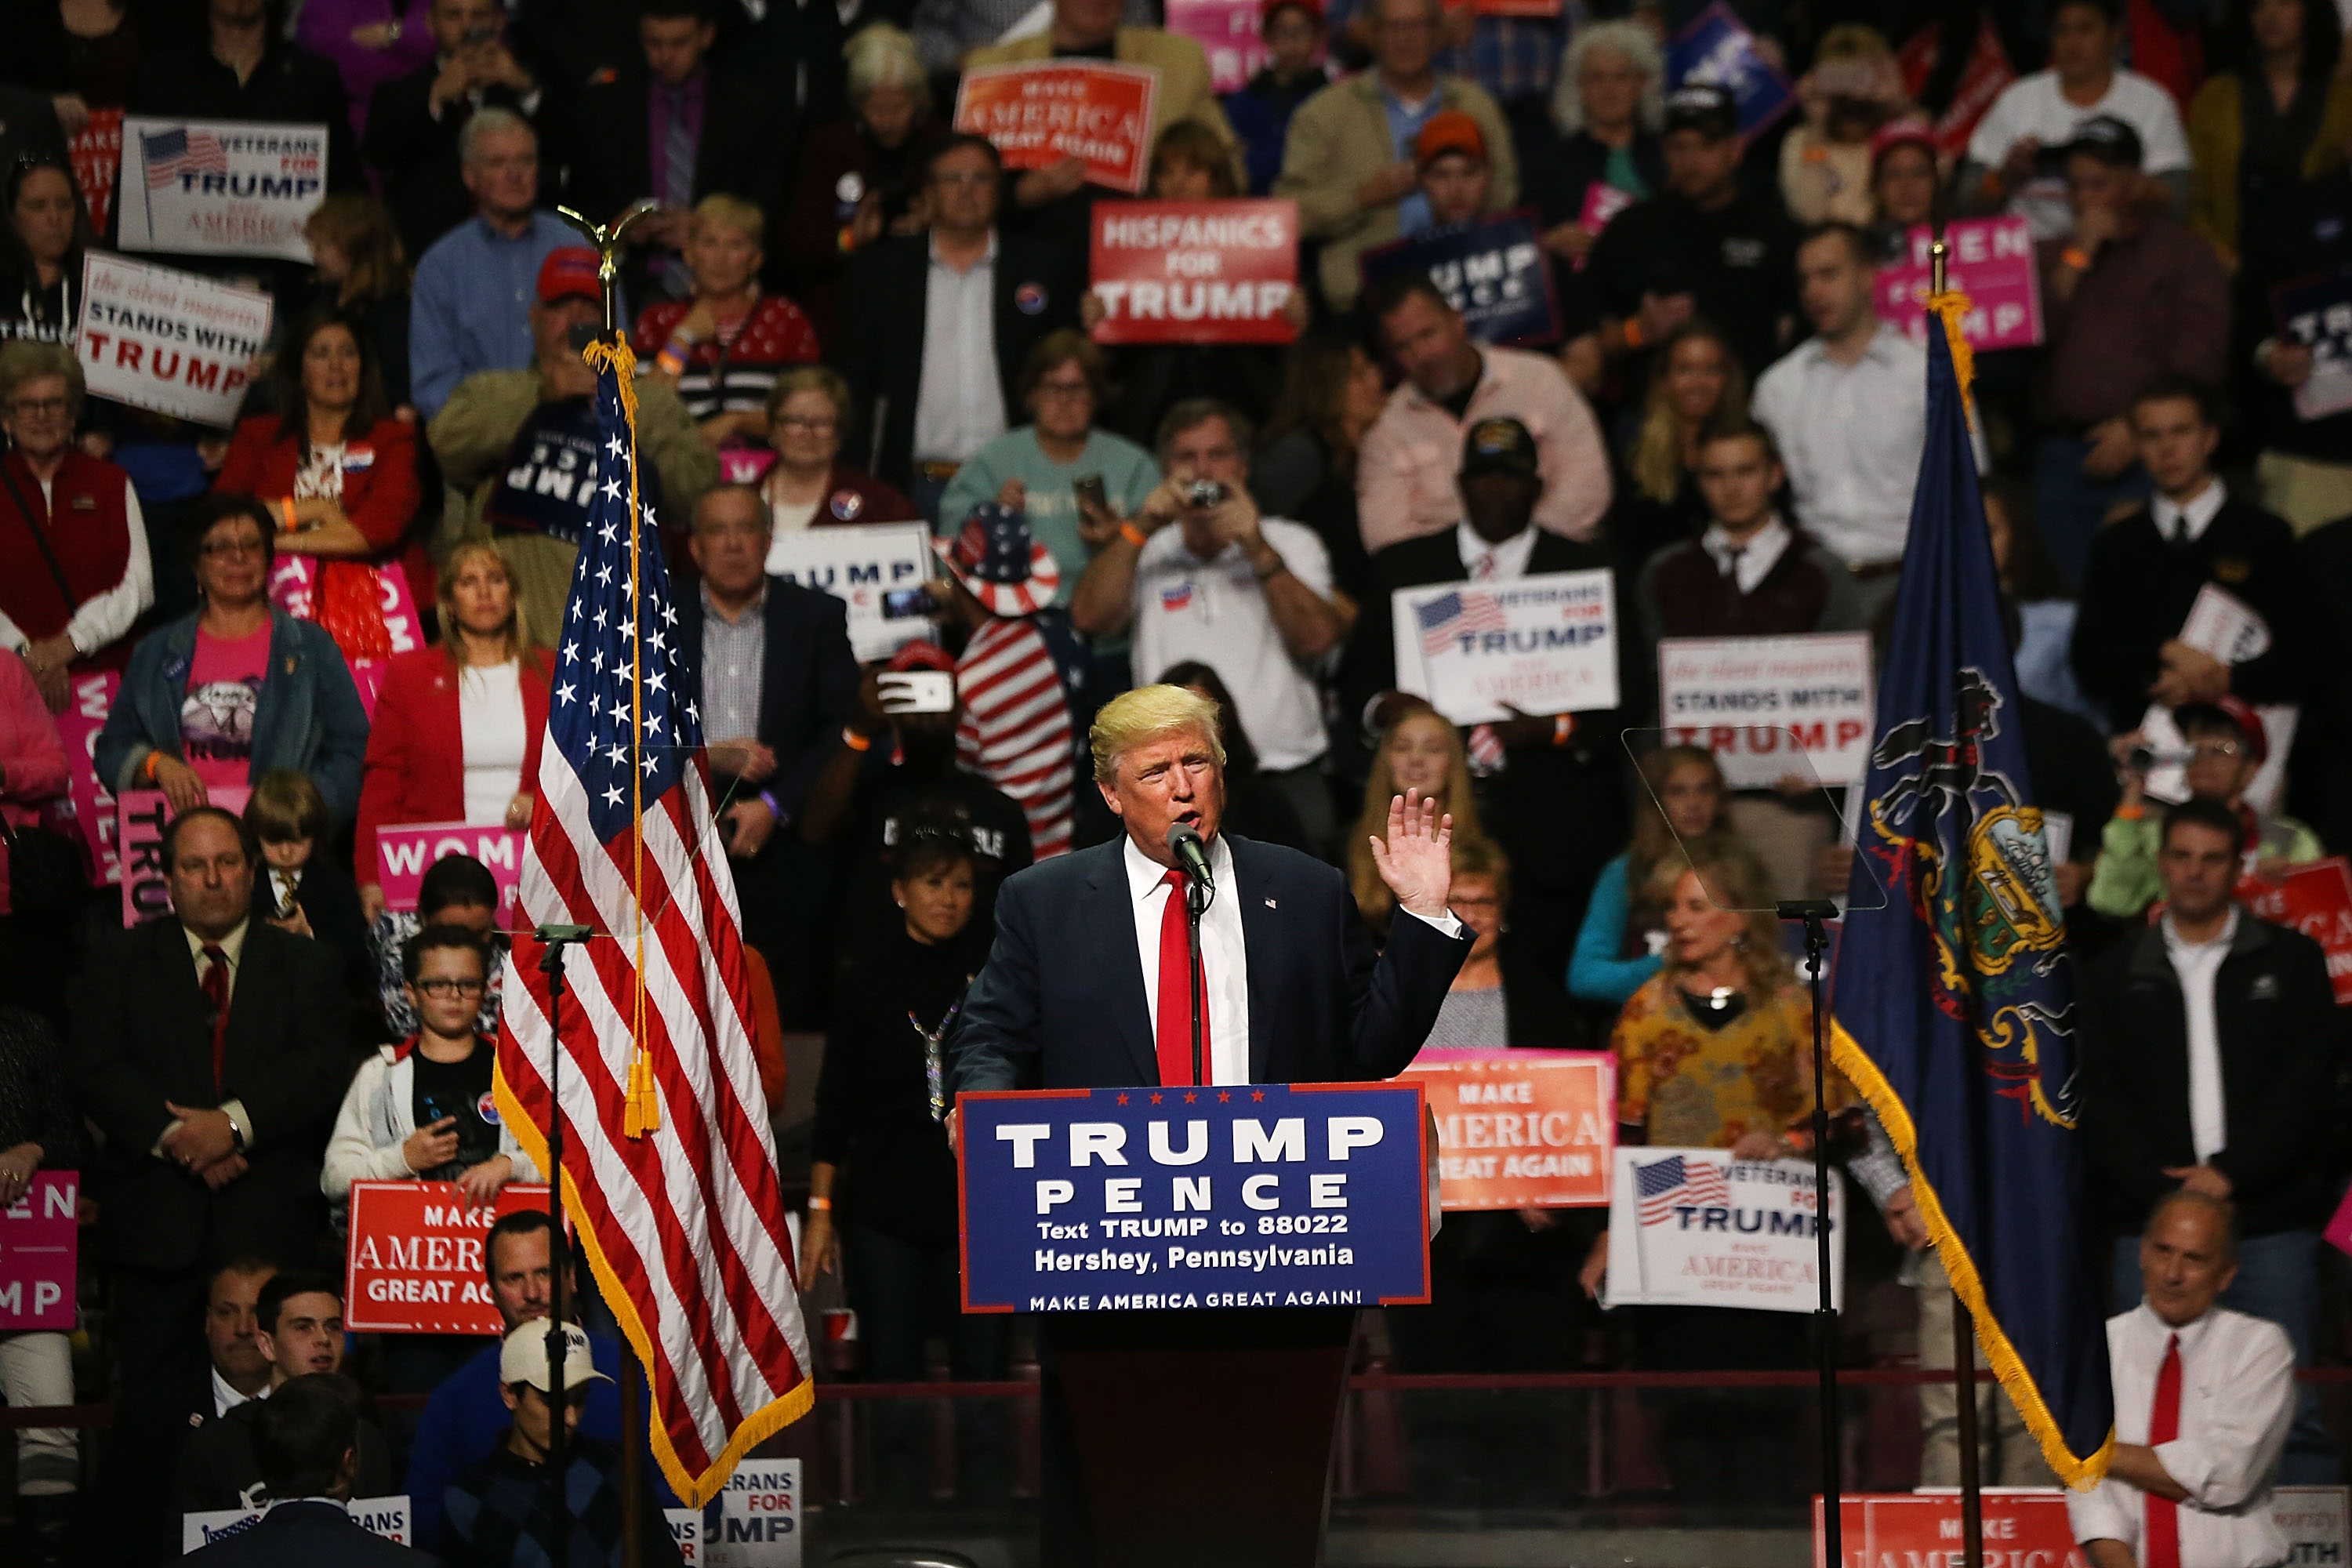 Donald Trump speaks at a rally on November 4, 2016 in Hershey, Penn. (Spencer Platt/Getty Images)